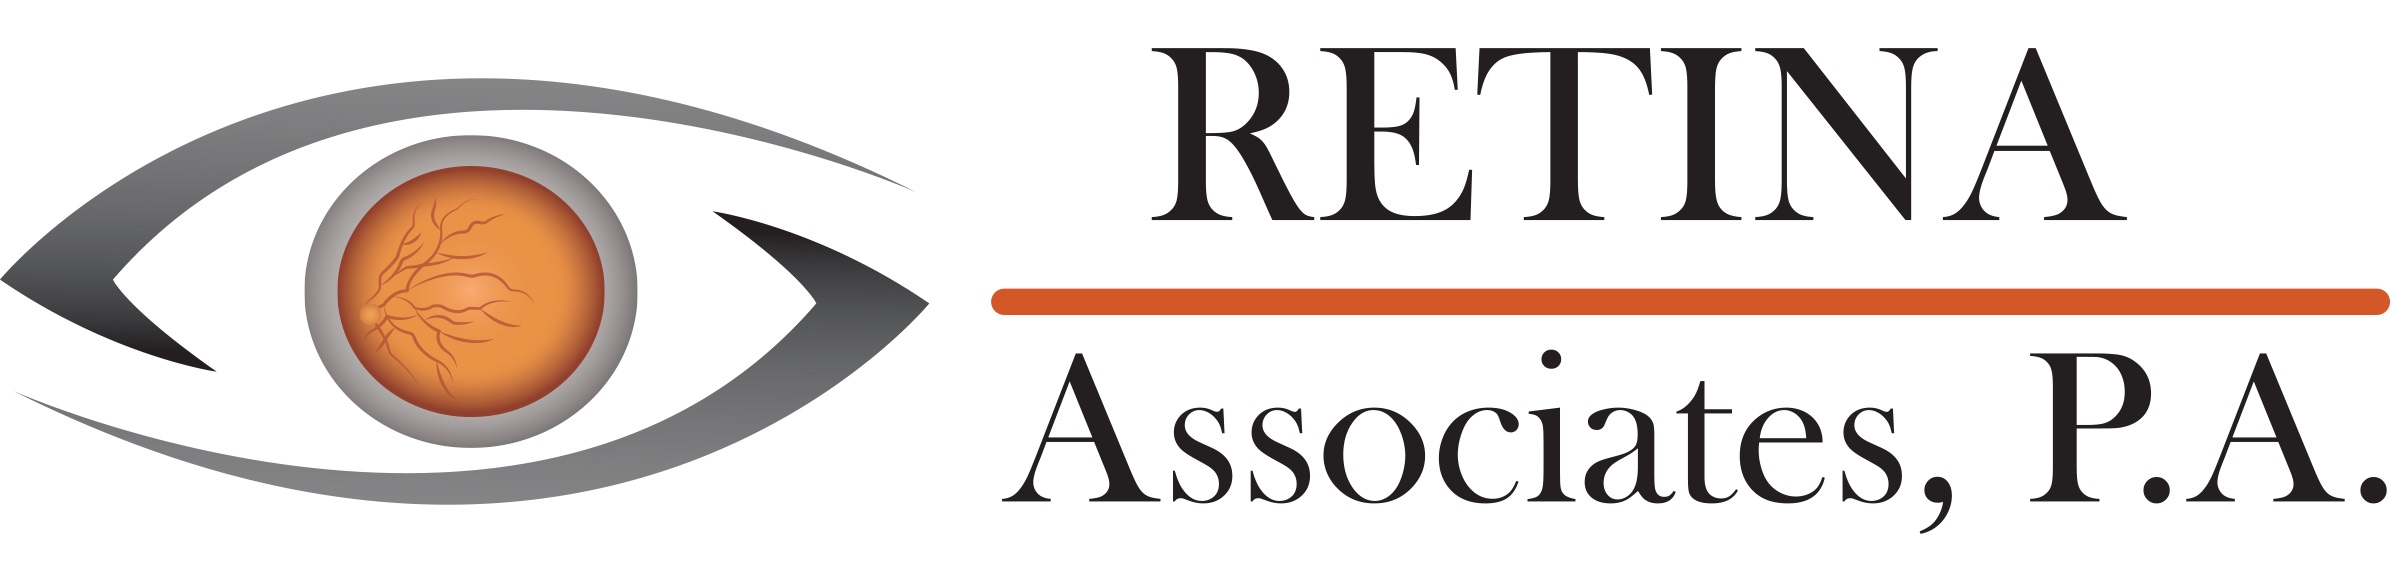 Retina Associates PA Logo